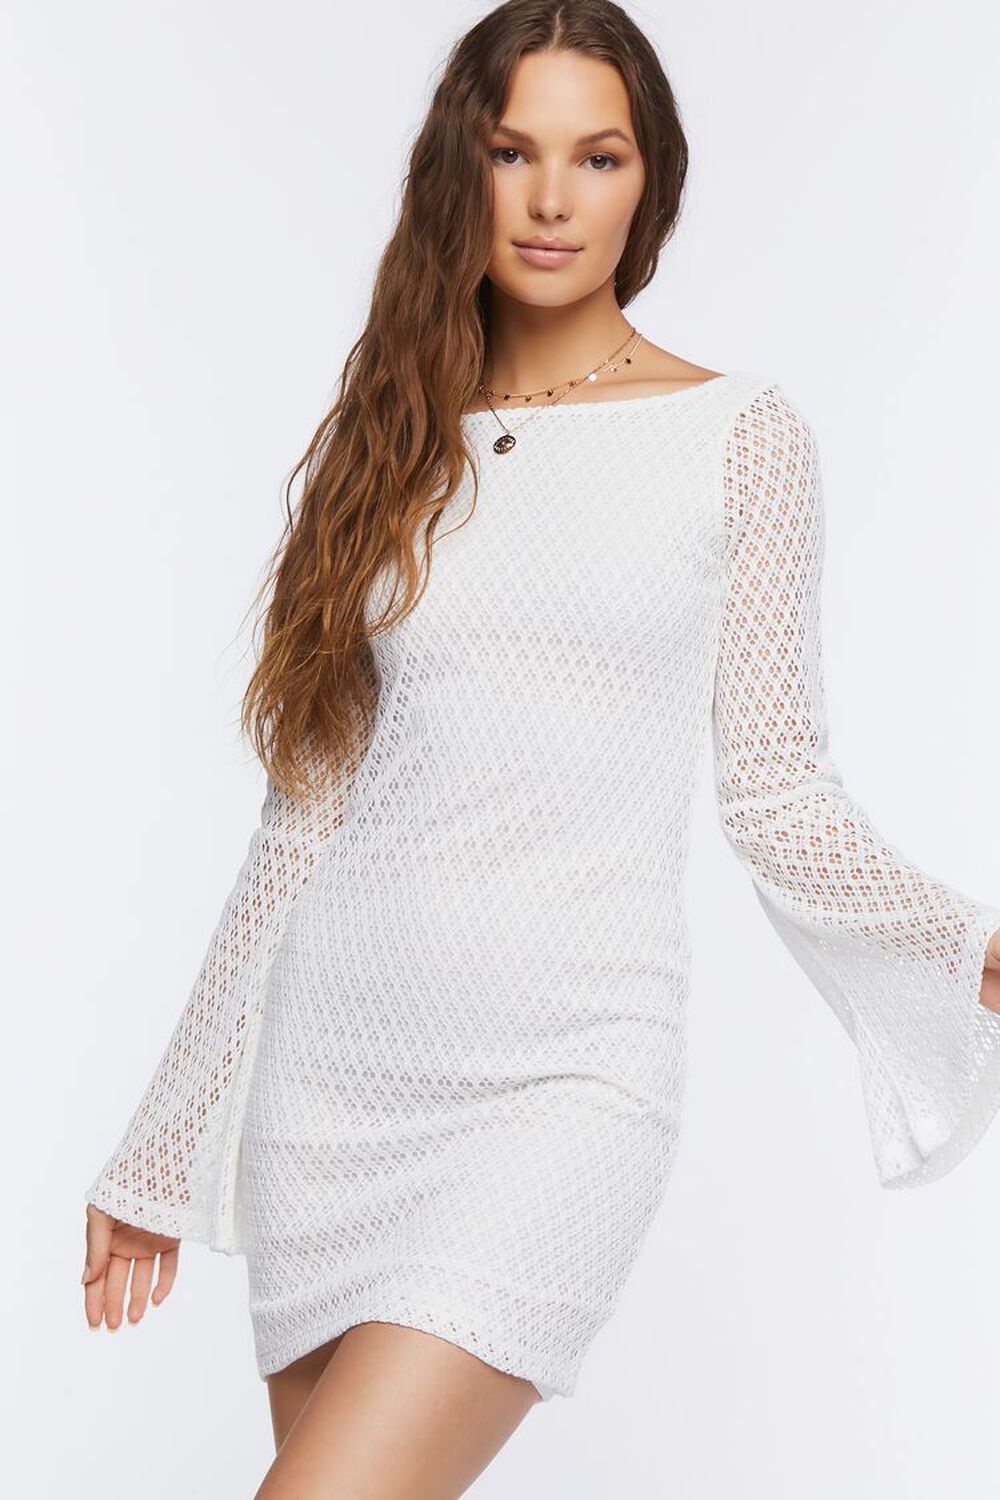 IVORY Bell-Sleeve Crochet Mini Dress, image 1